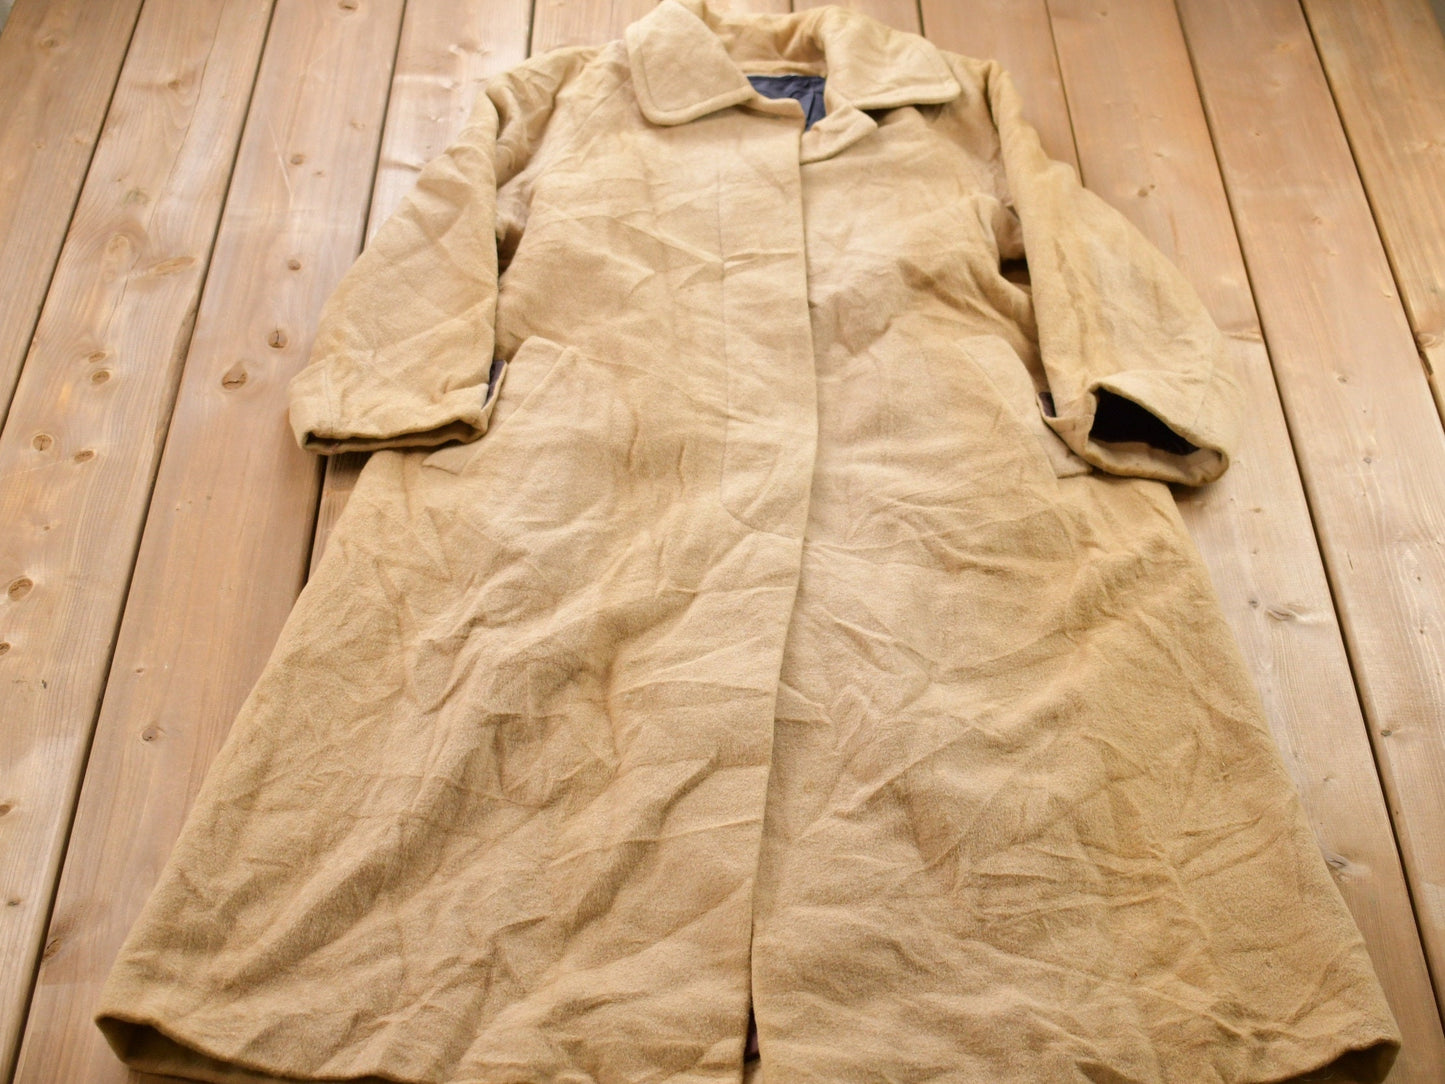 Vintage 1990s Wool Full Length Jacket / Wool Jacket  / Vintage 90s Jacket / Outdoor / Winter / Cozy Trench Coat